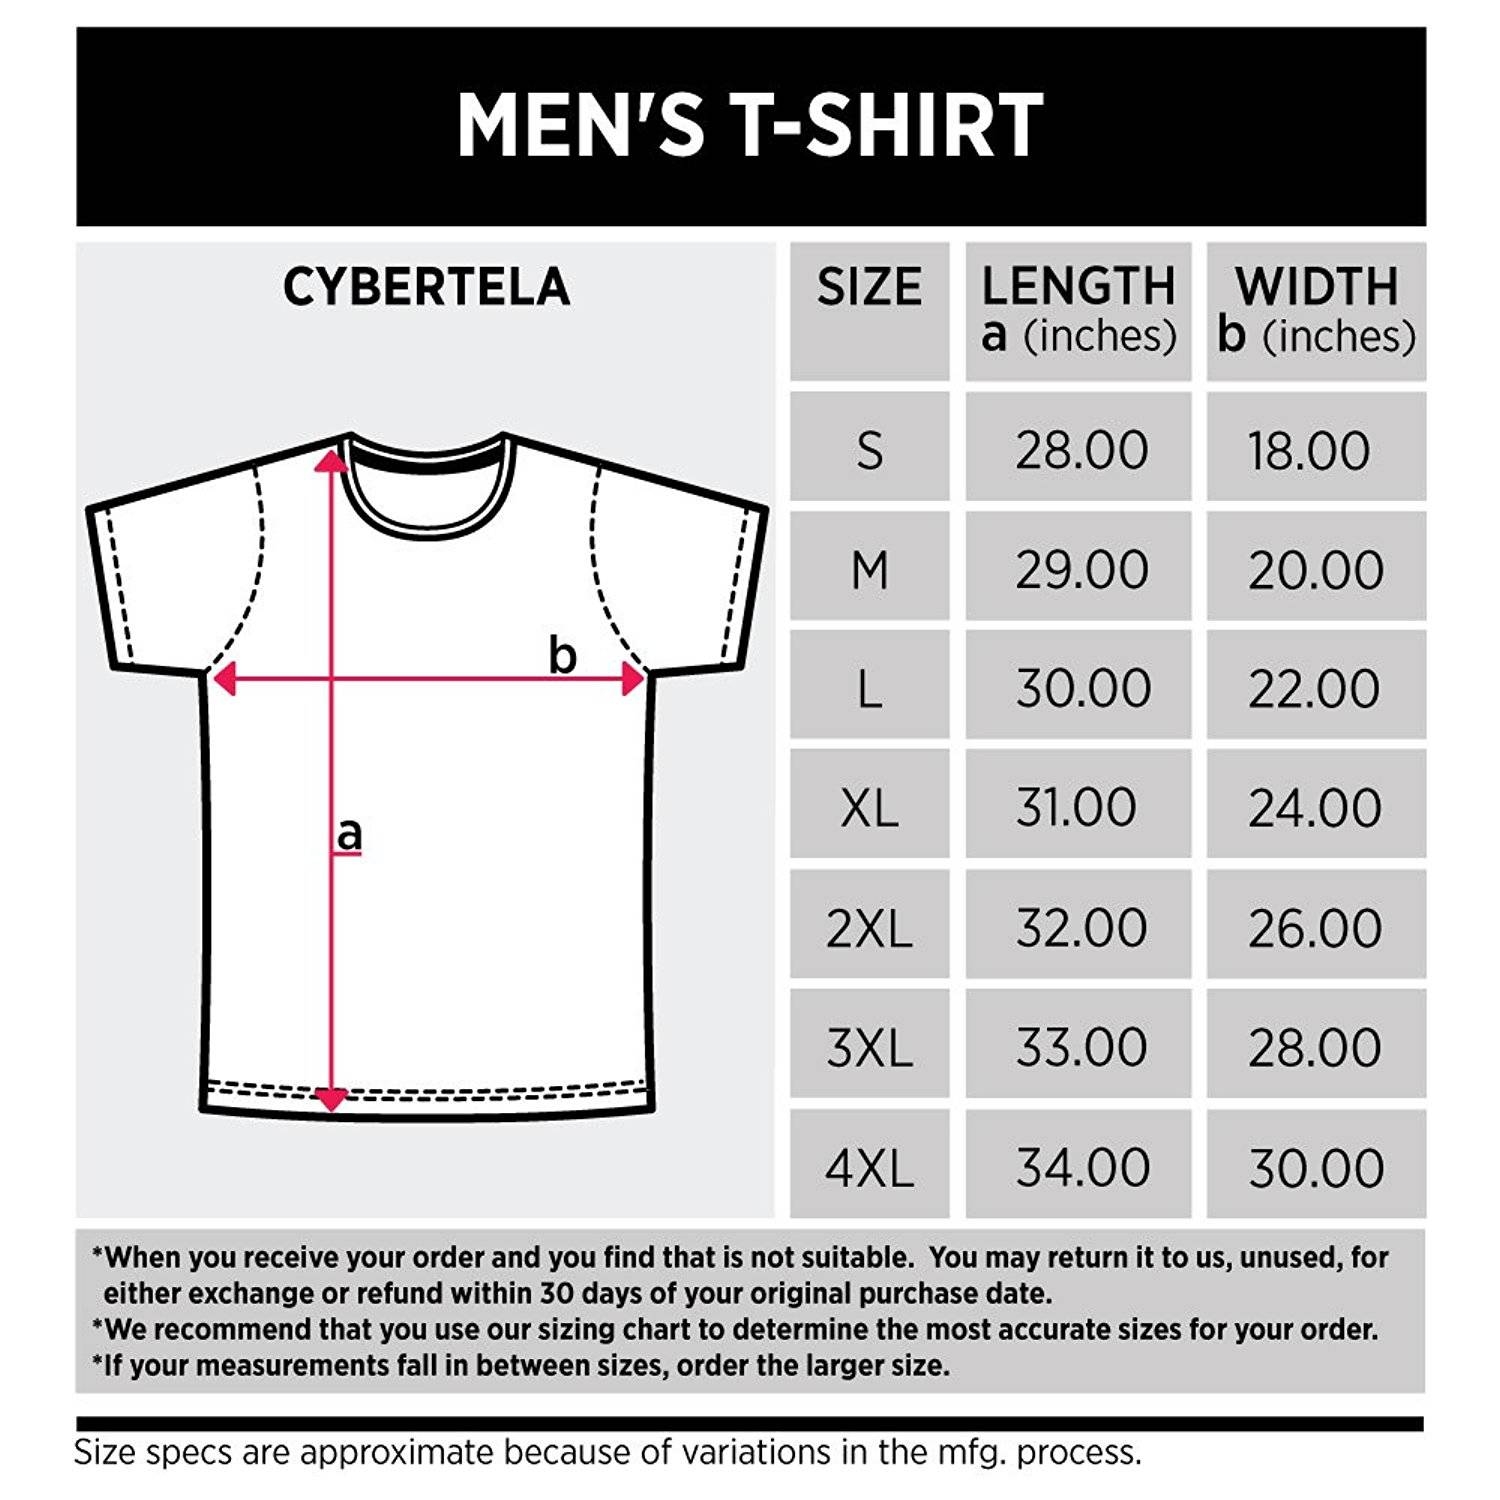 Tommy Bahama Shirt Size Chart